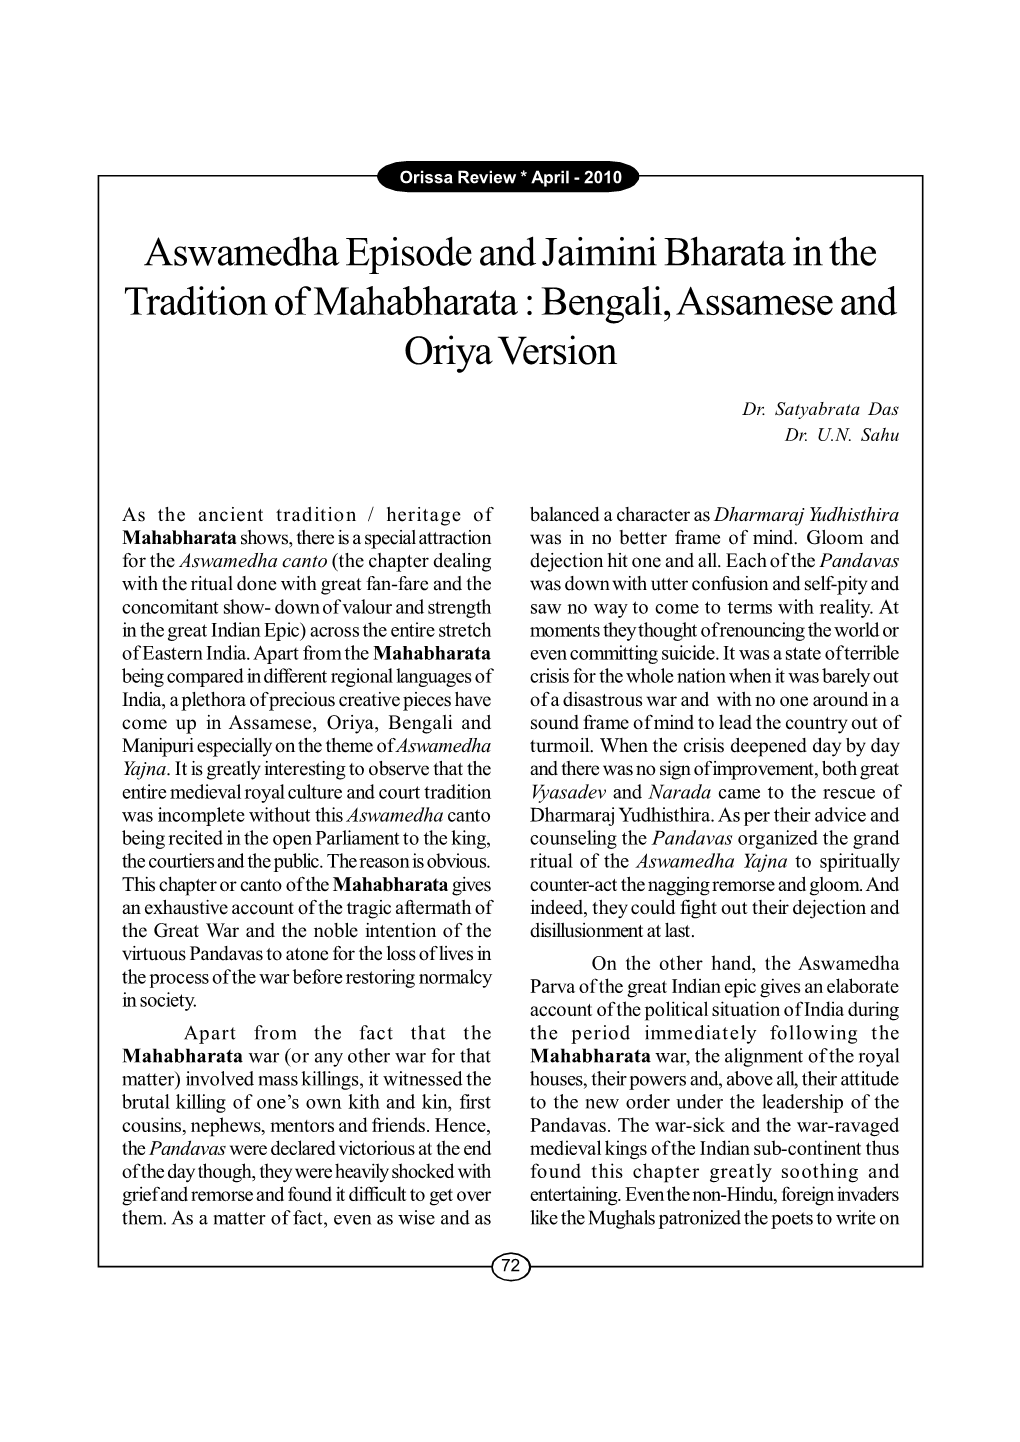 Aswamedha Episode and Jaimini Bharata in the Tradition of Mahabharata : Bengali, Assamese and Oriya Version